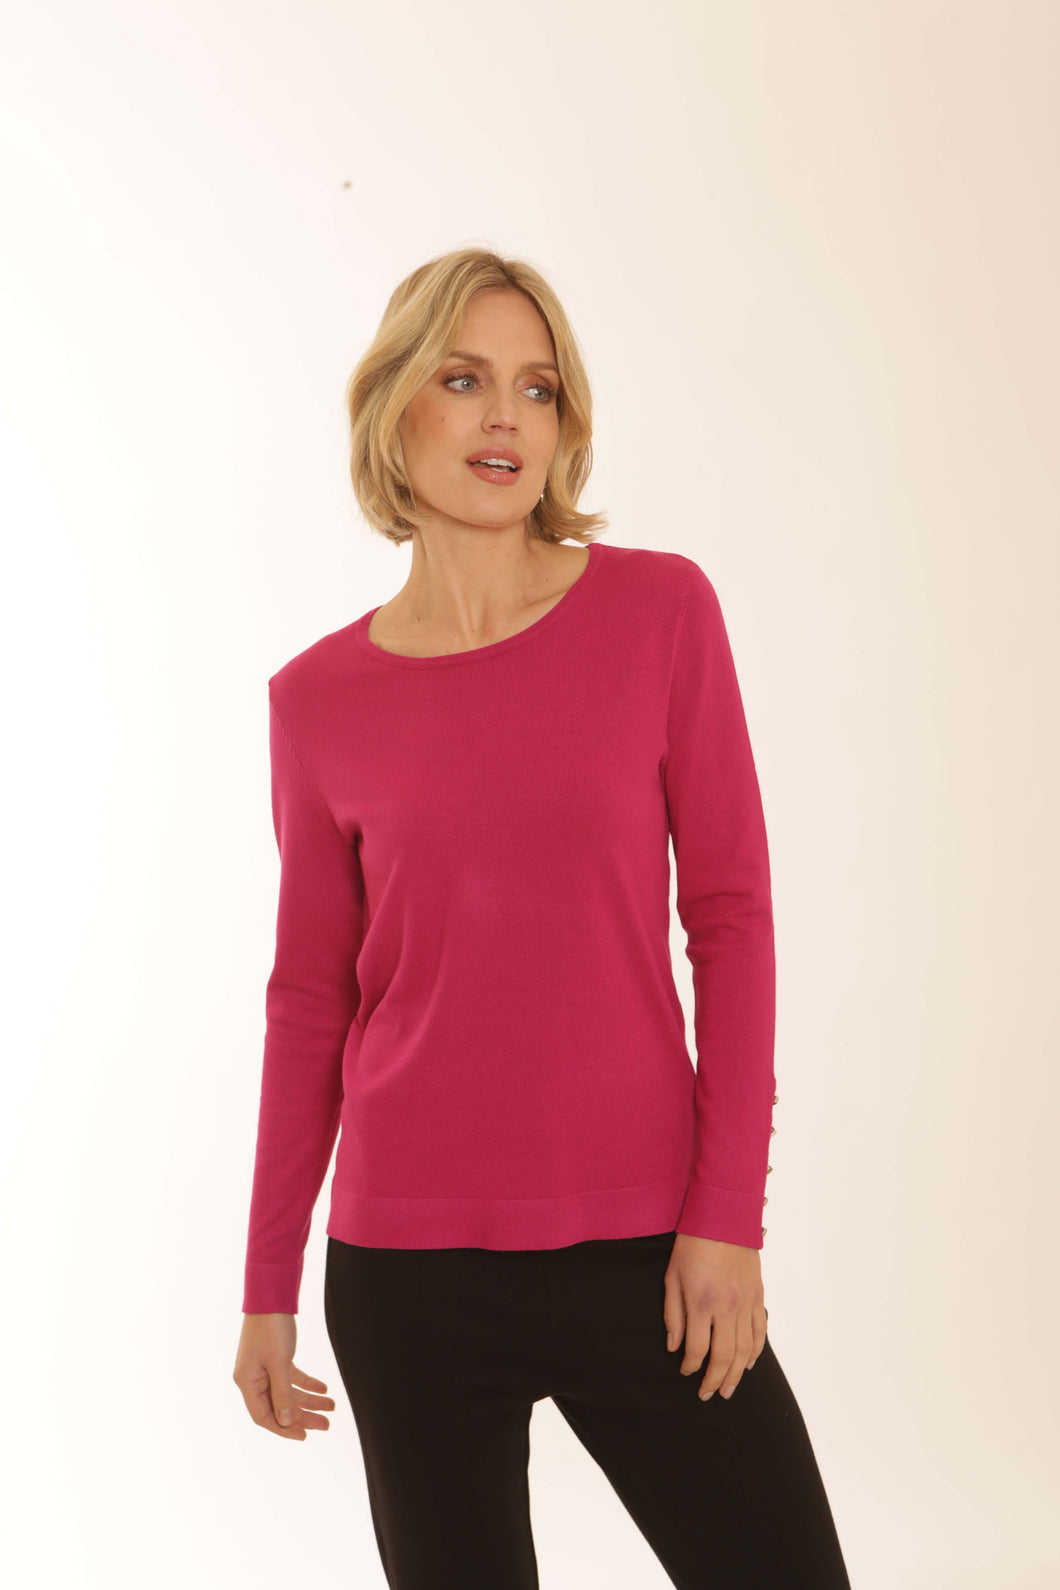 Pomodoro Pink Sweater